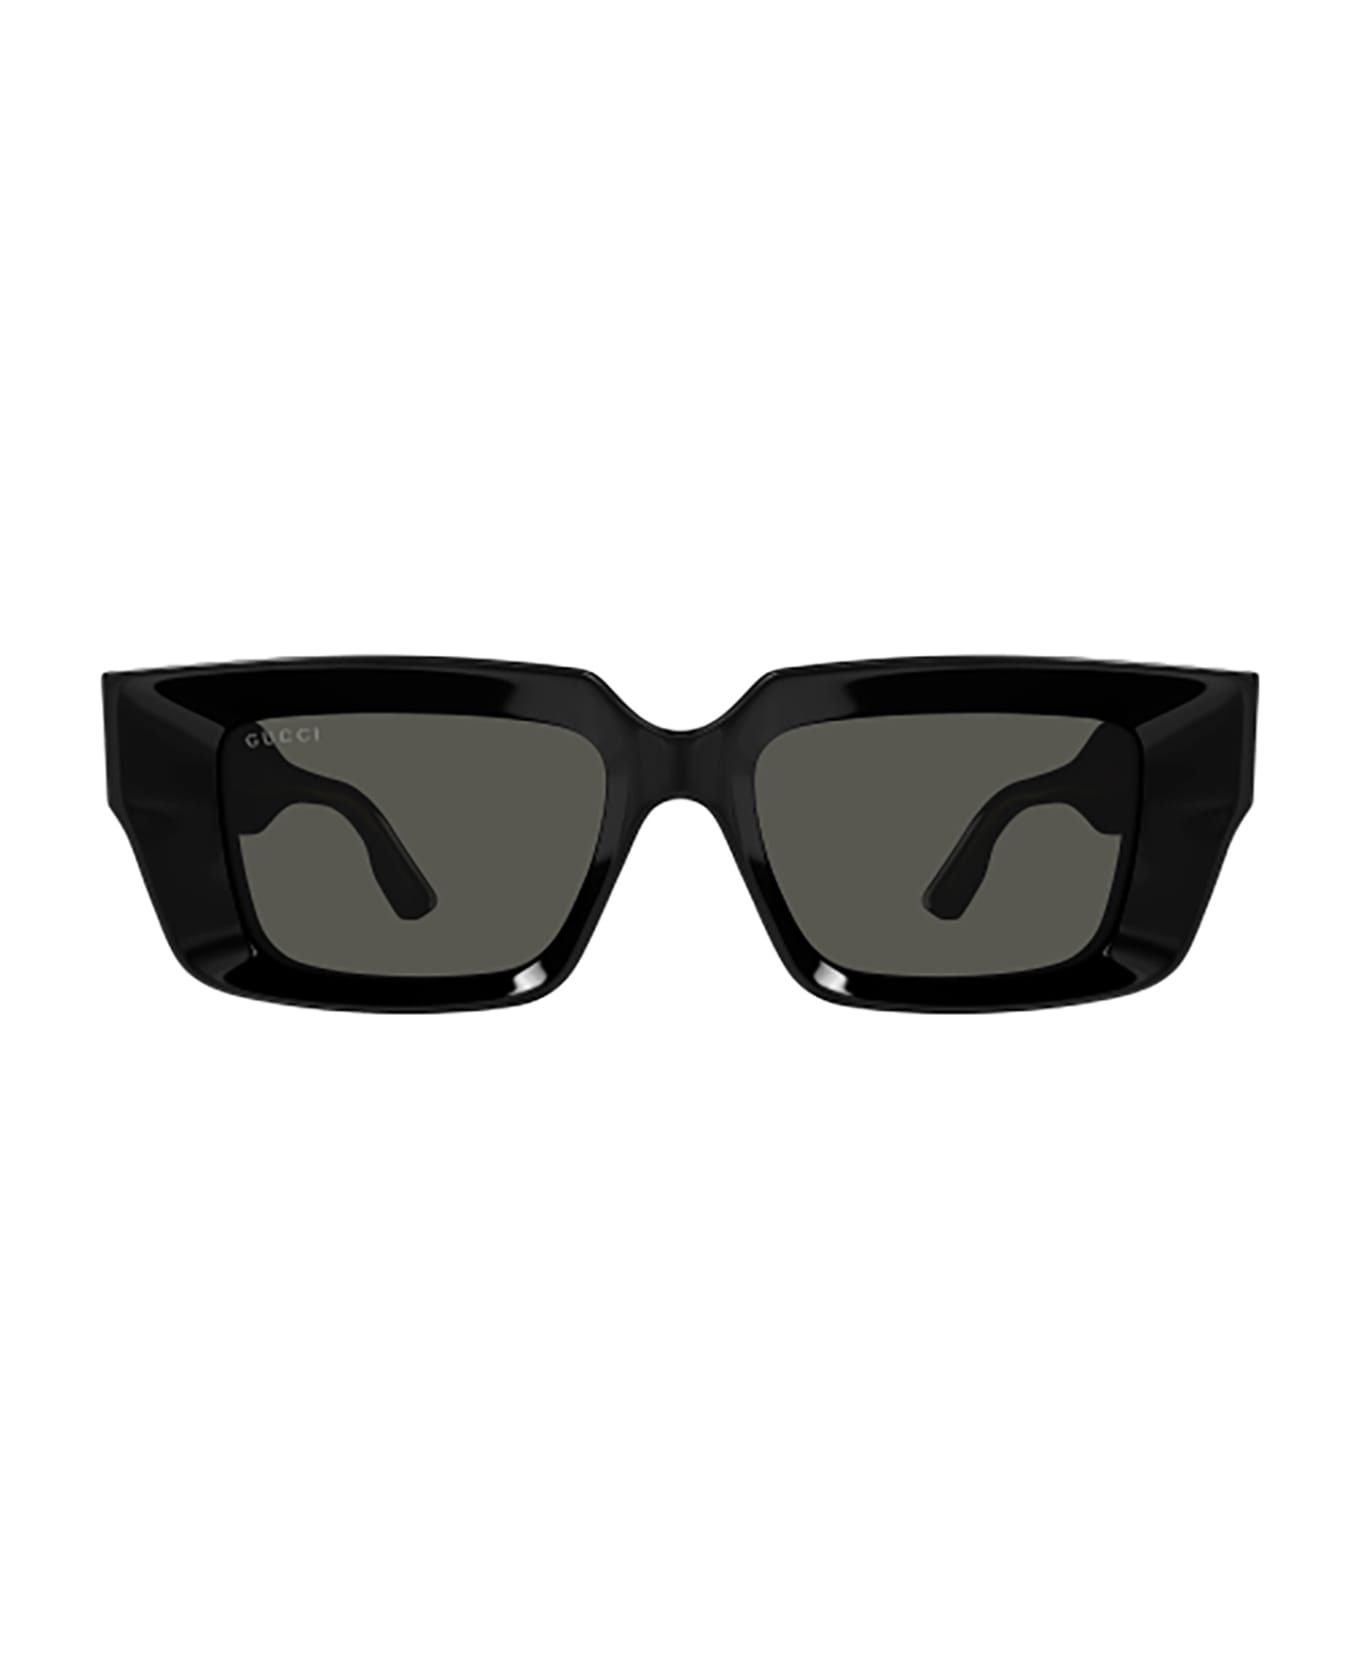 Gucci Eyewear GG1529S Sunglasses - Gigi Hadid TH GIGI HADID4 003 99 Women Sunglasses Yellow Lens